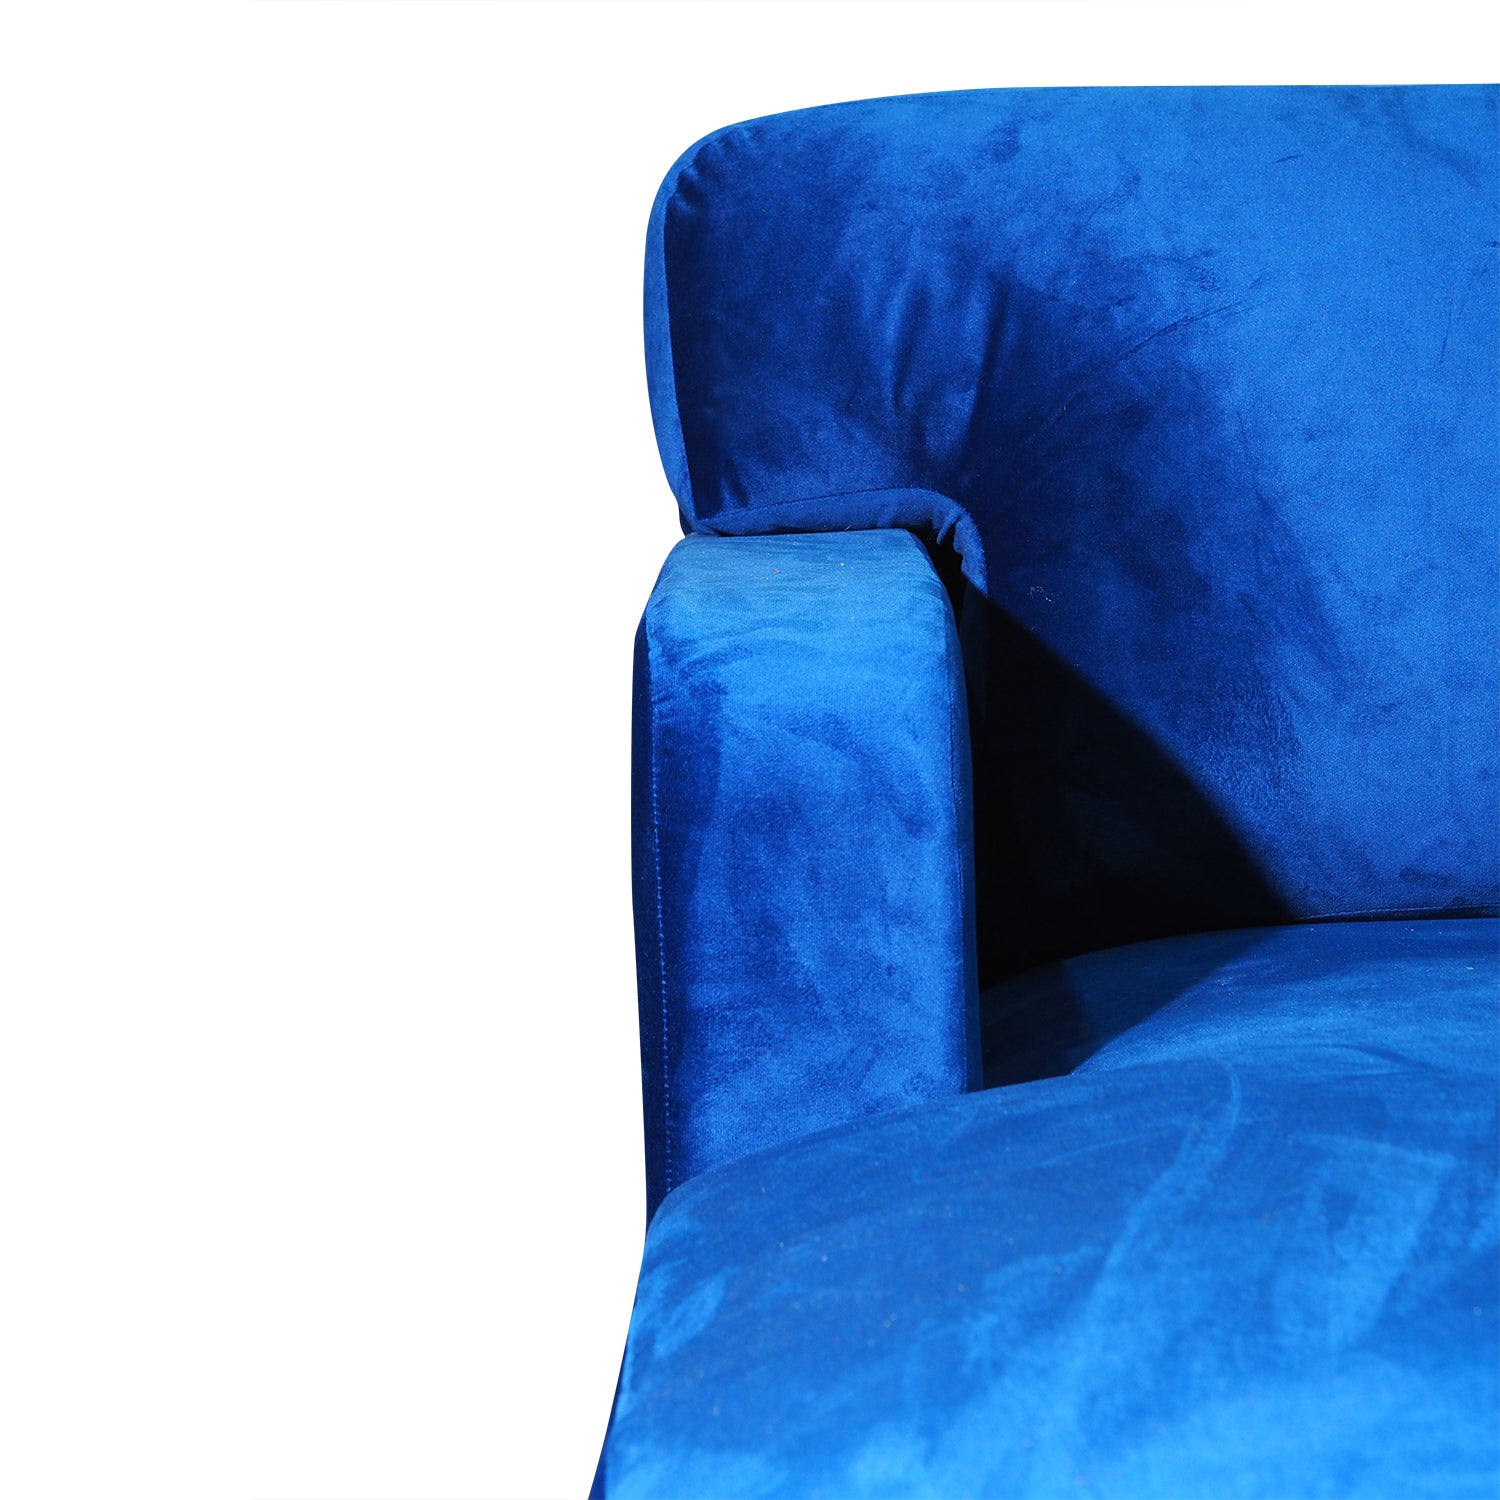 Blu Sofa L